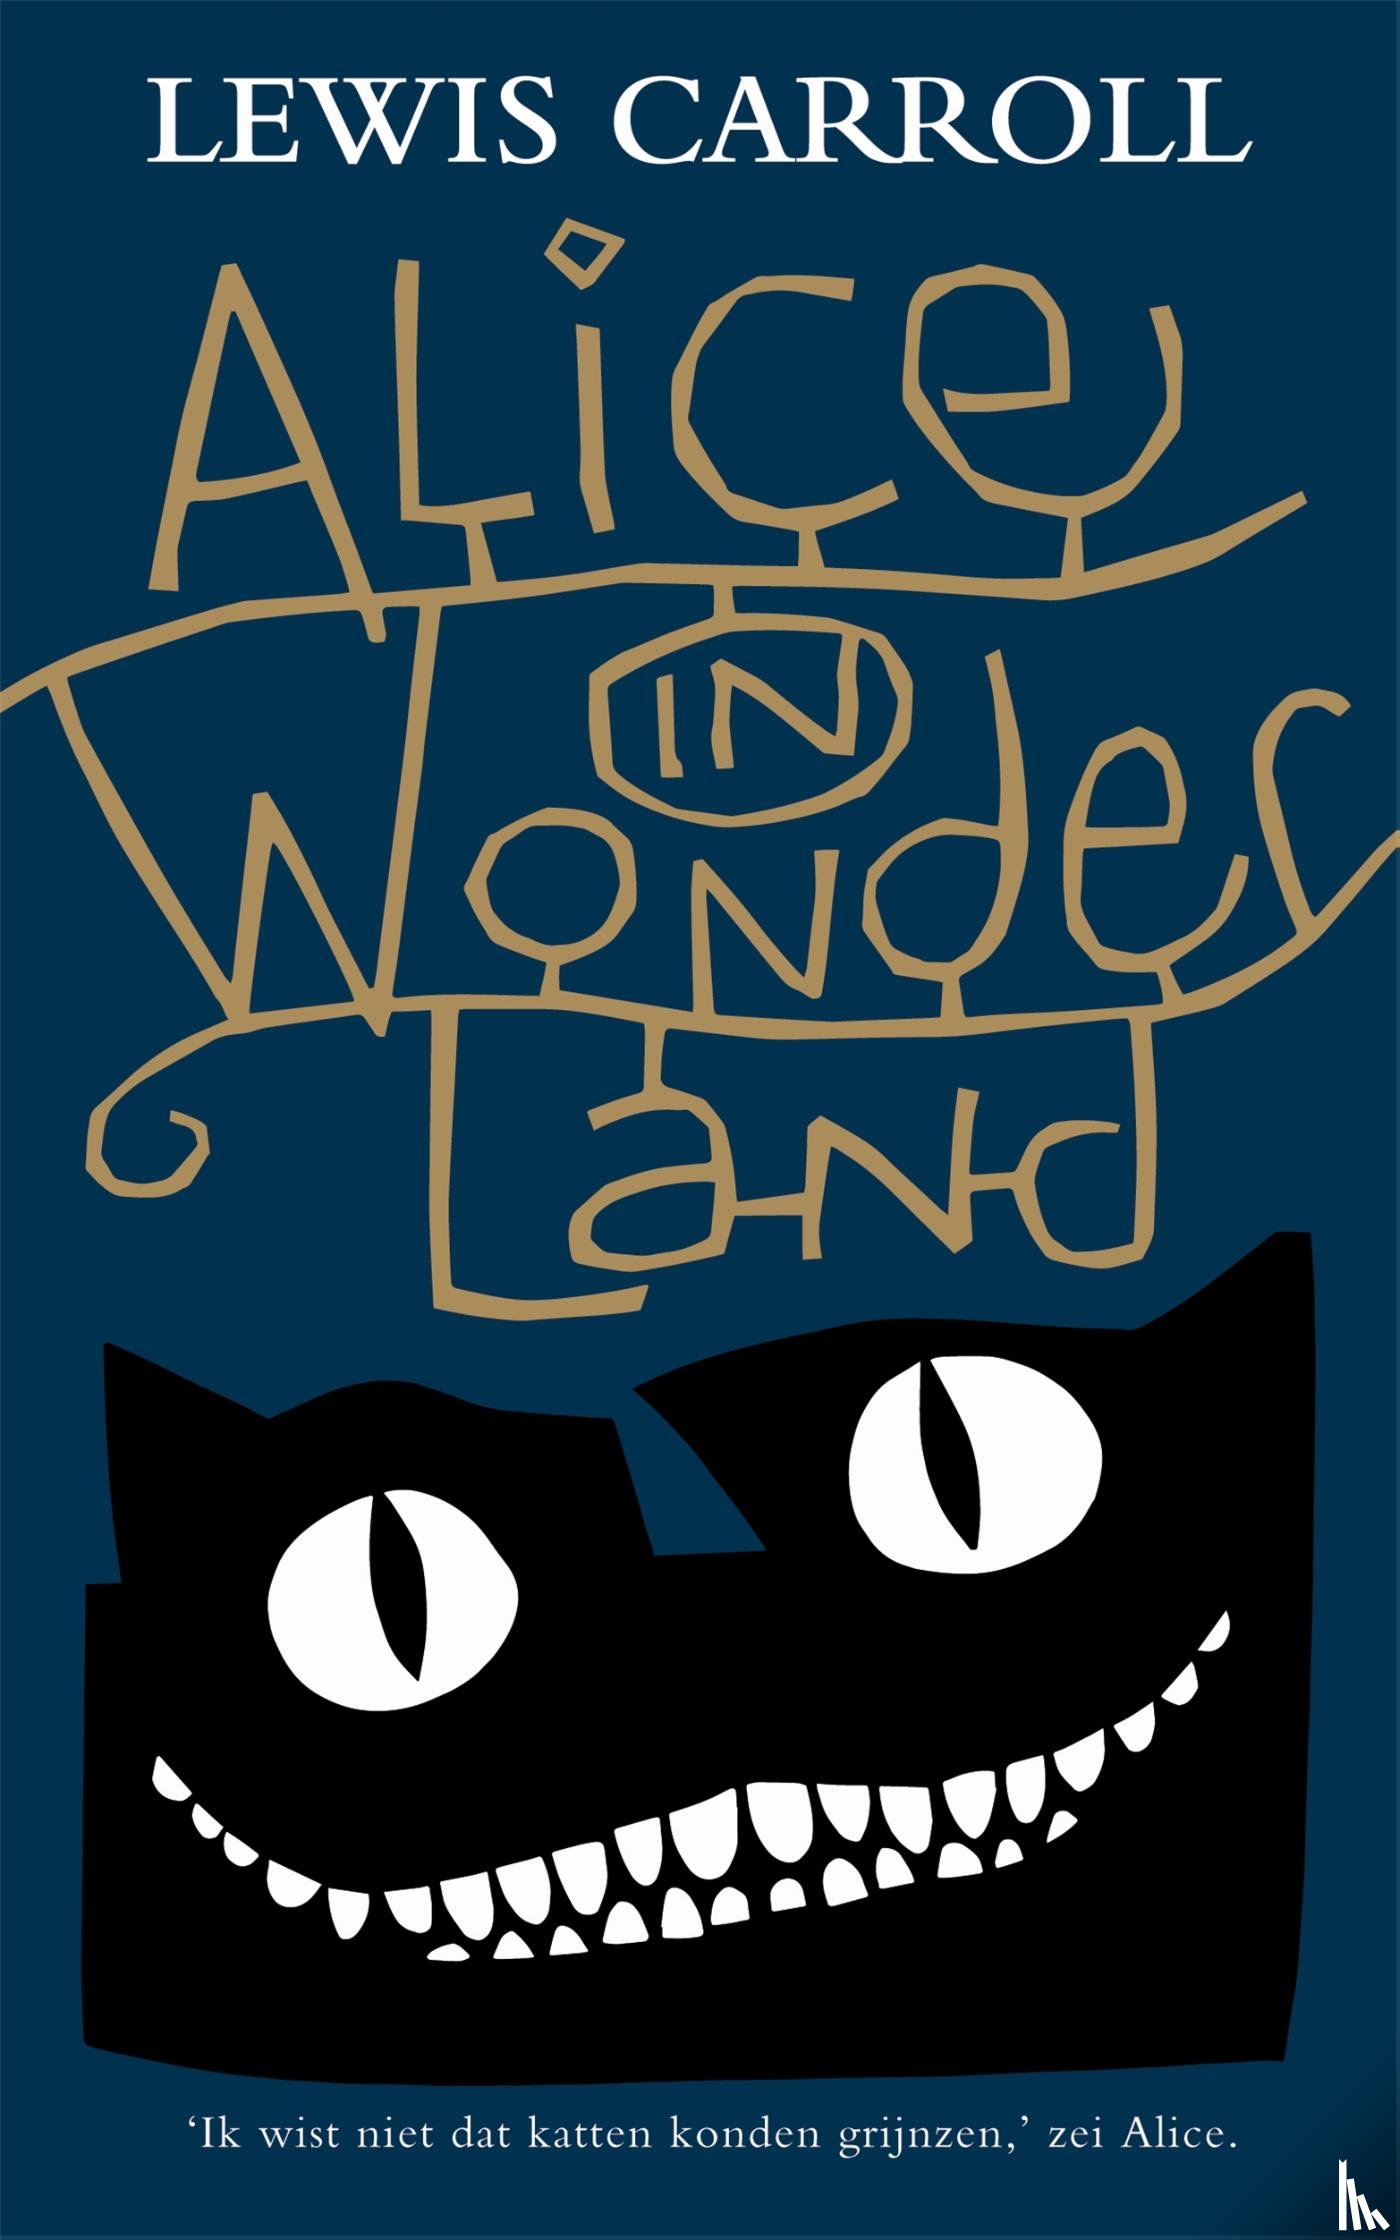 Caroll, Lewis - Alice in Wonderland